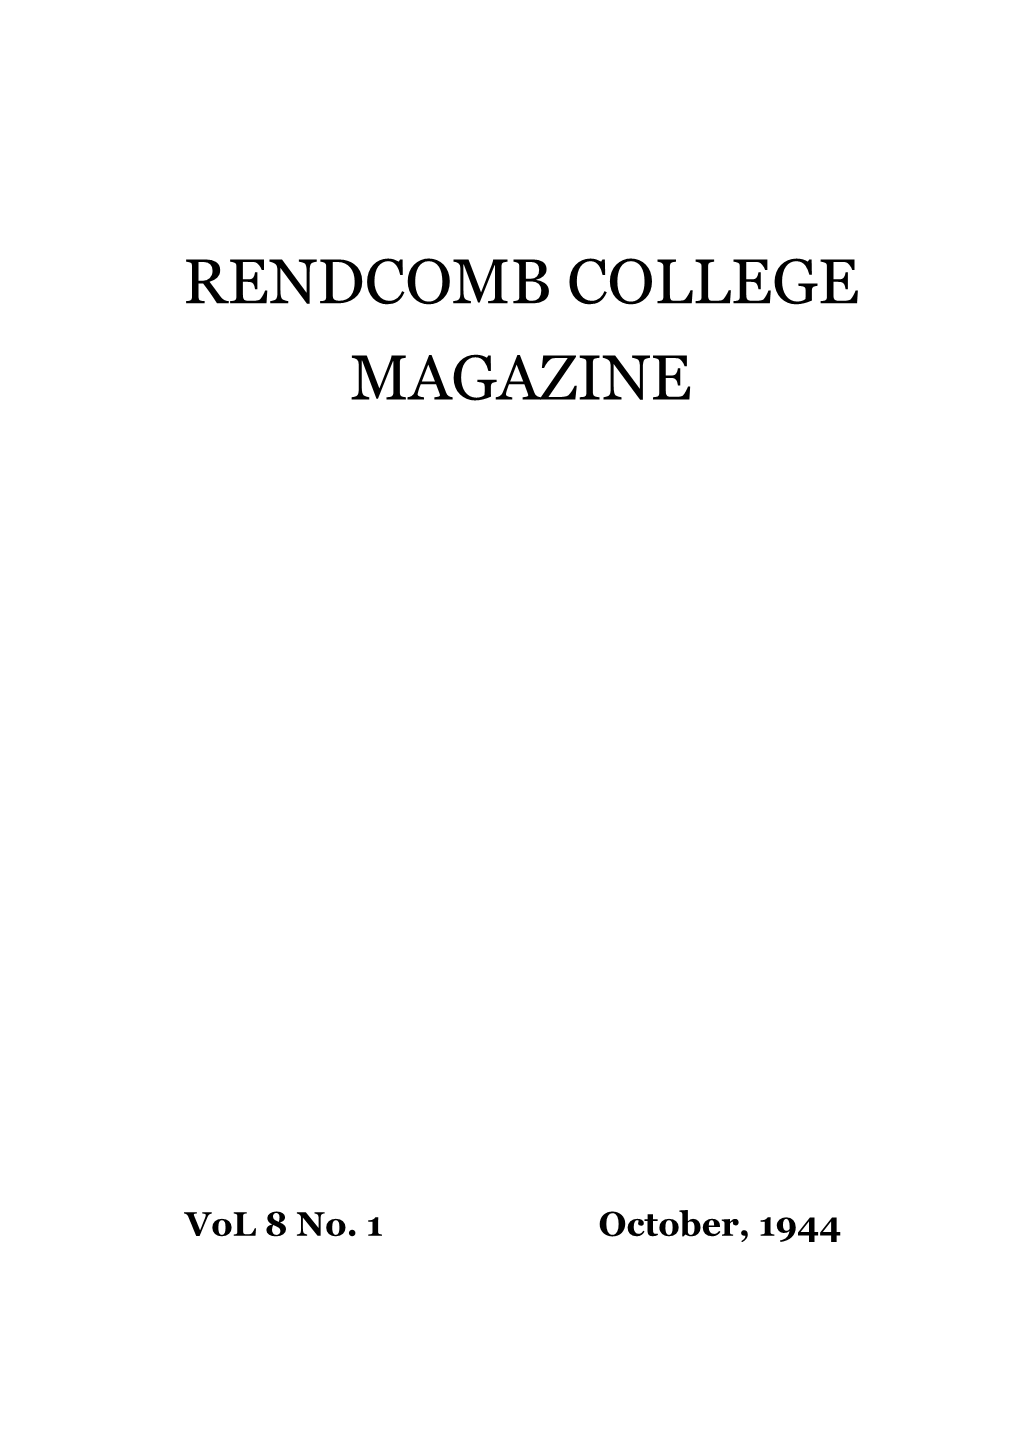 Rendcomb College Magazine October 1944